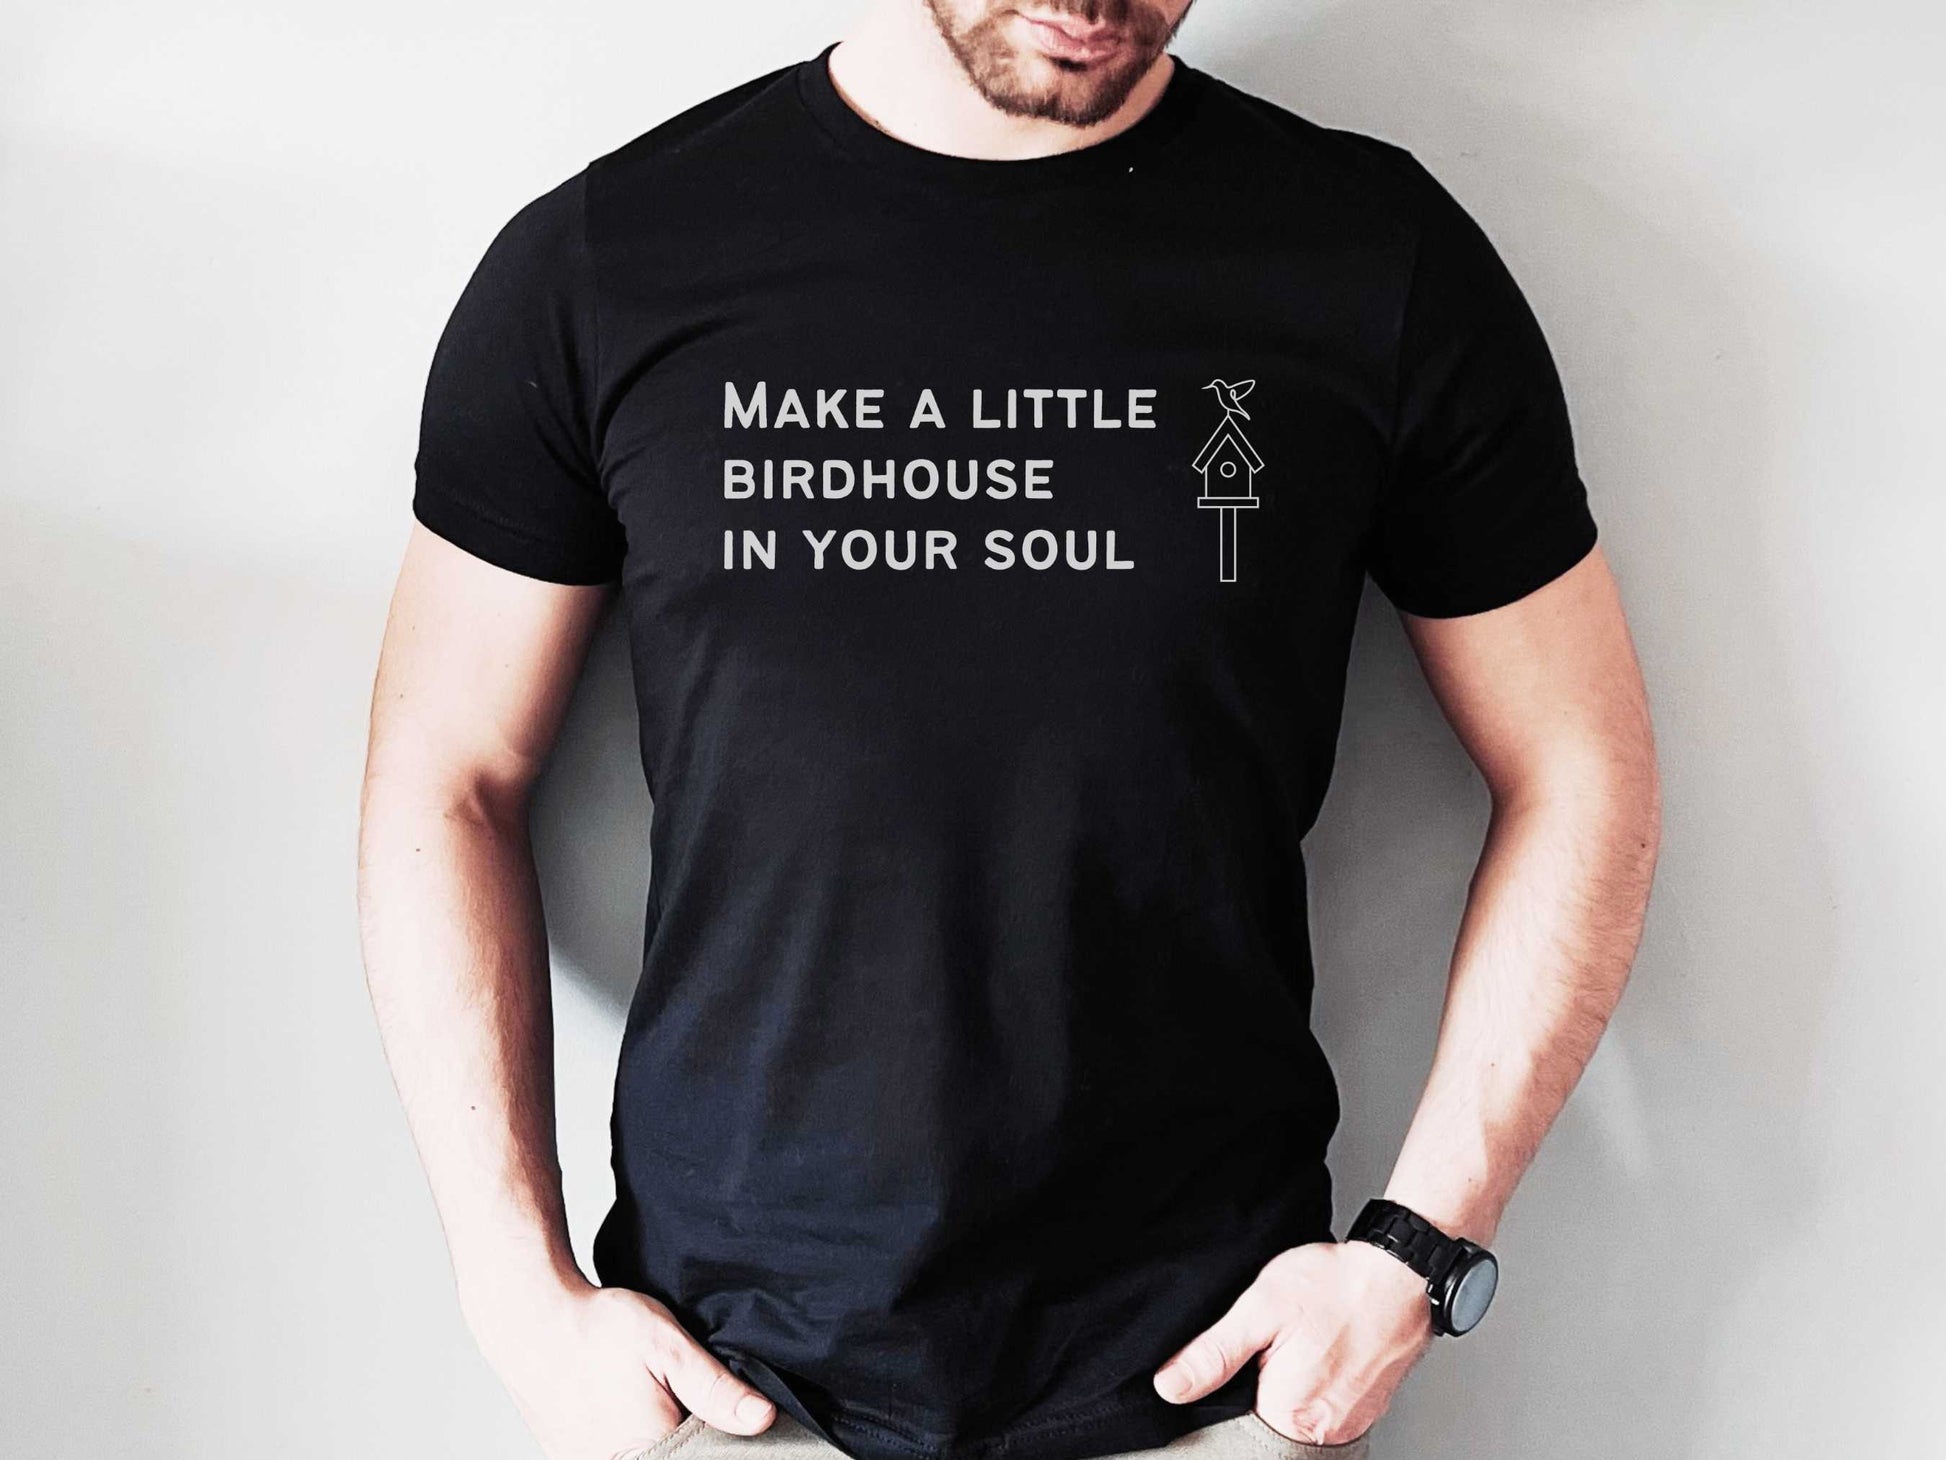 Birdhouse in Your Soul TMBG Tee in Black